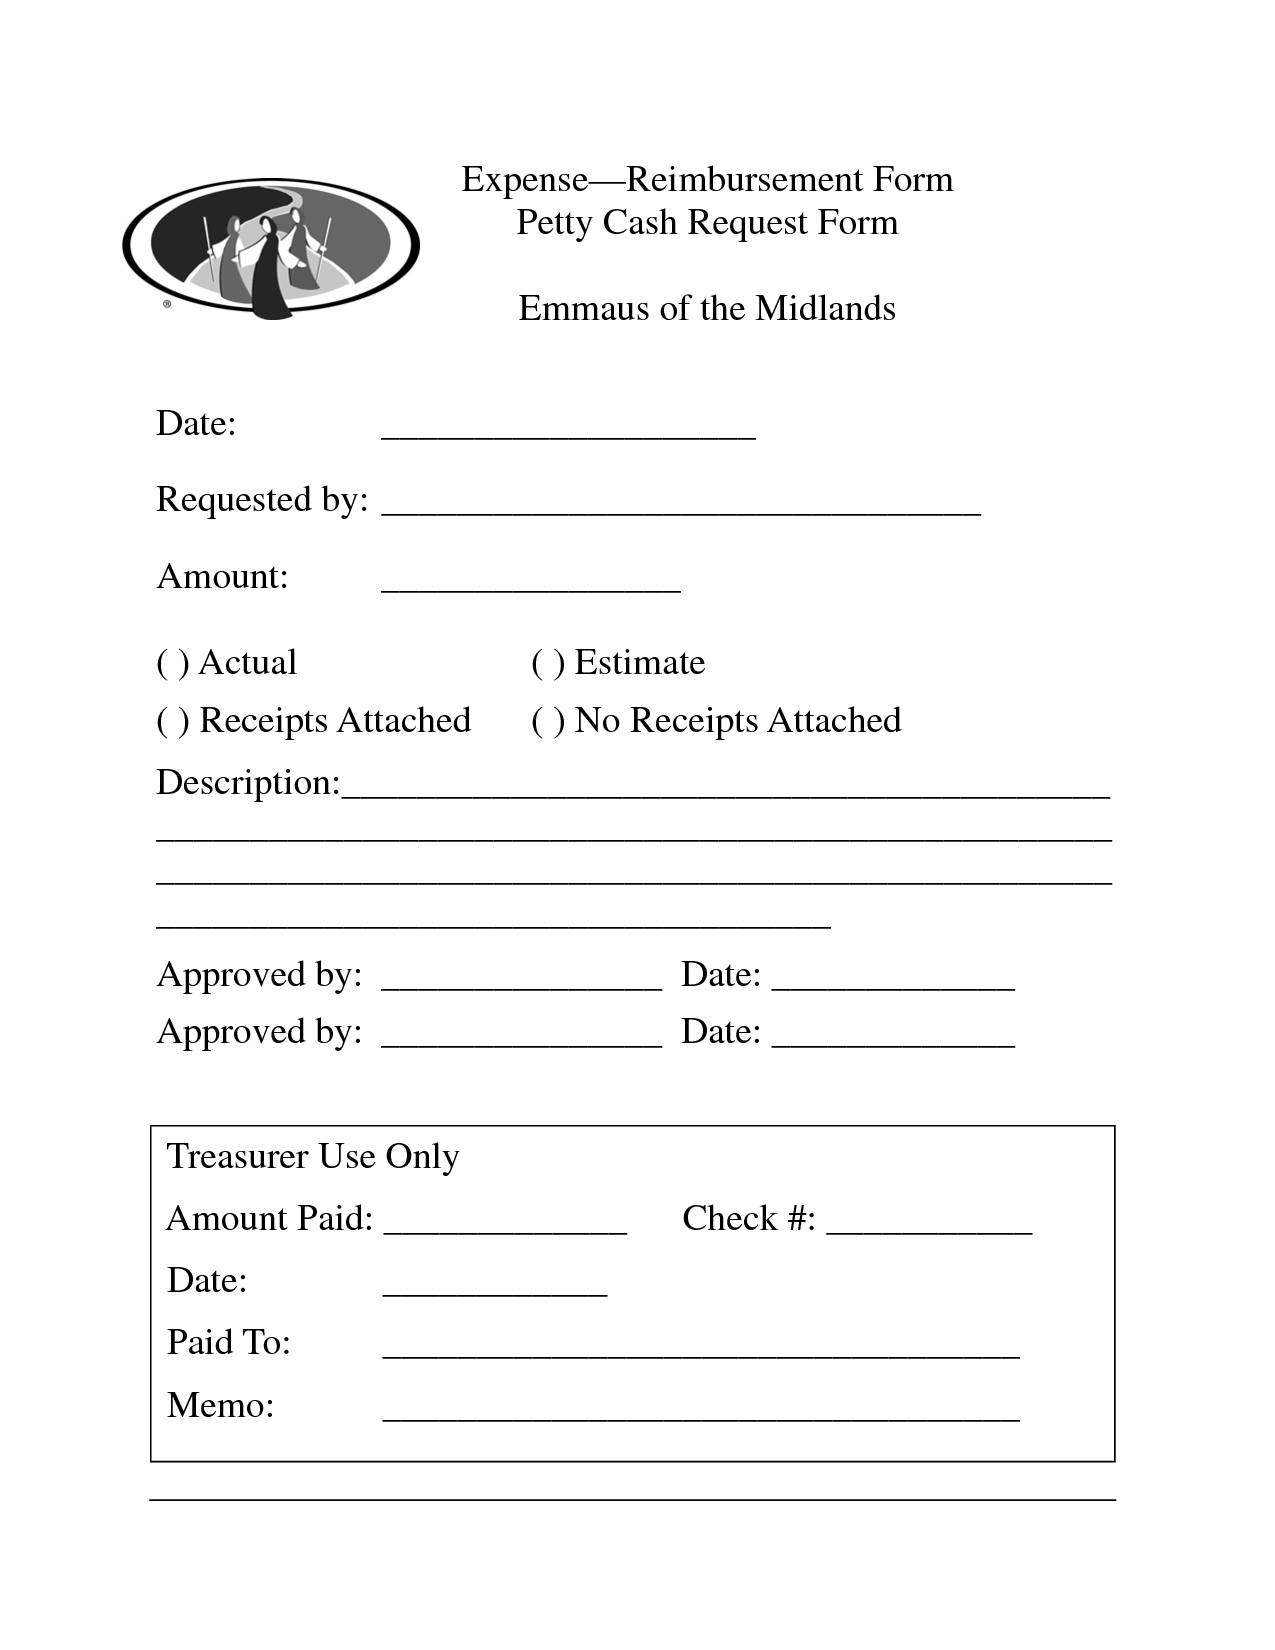 Petty Cash Request Form Template